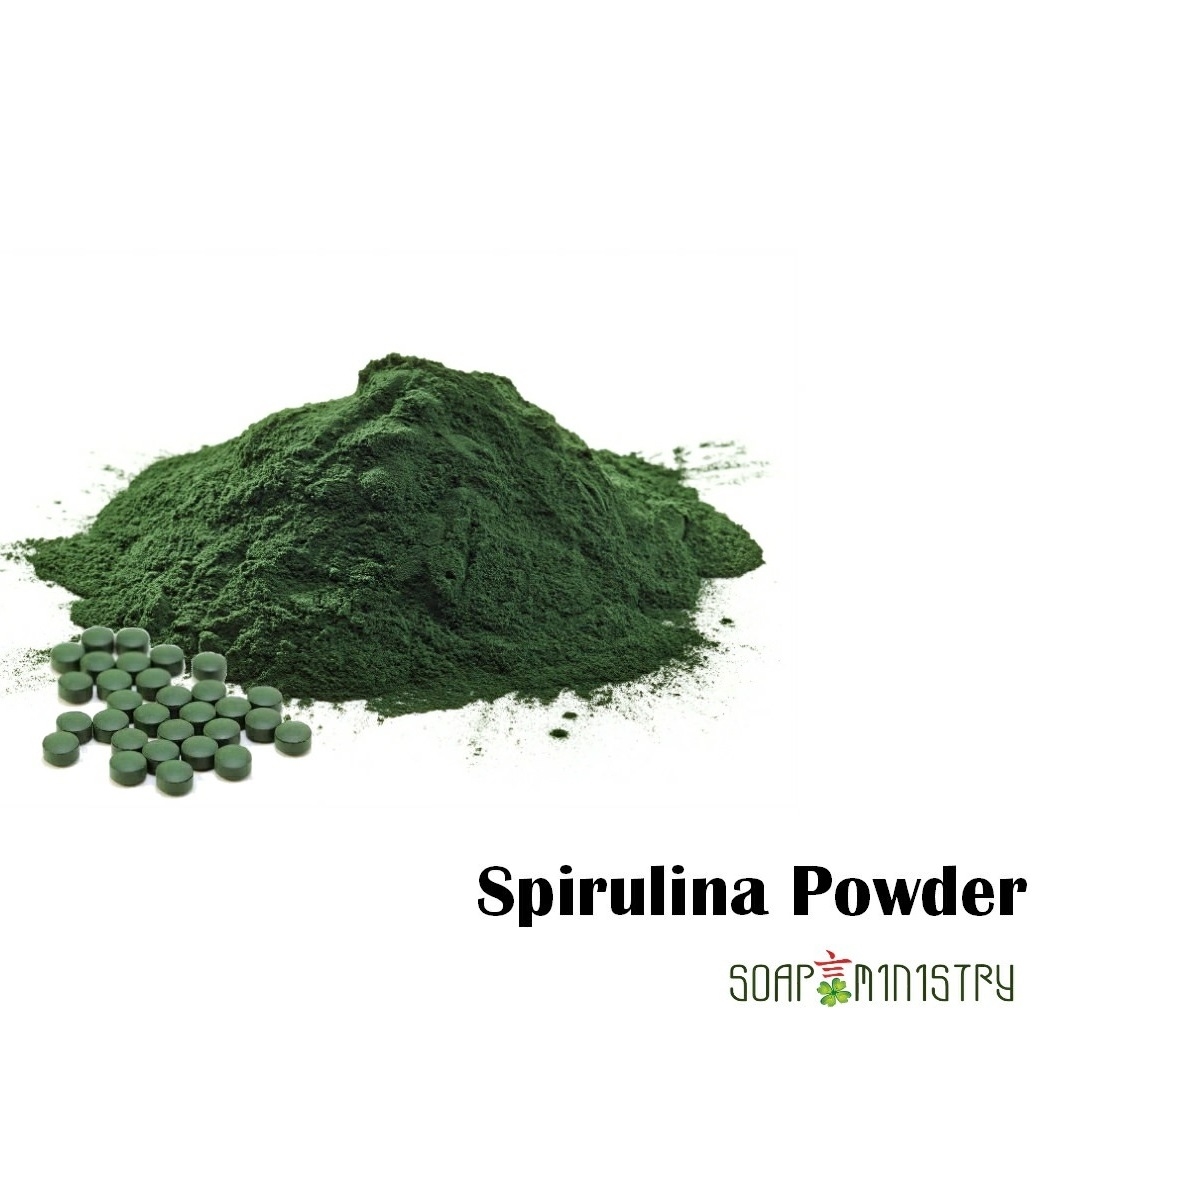 Spirulina Powder 500g